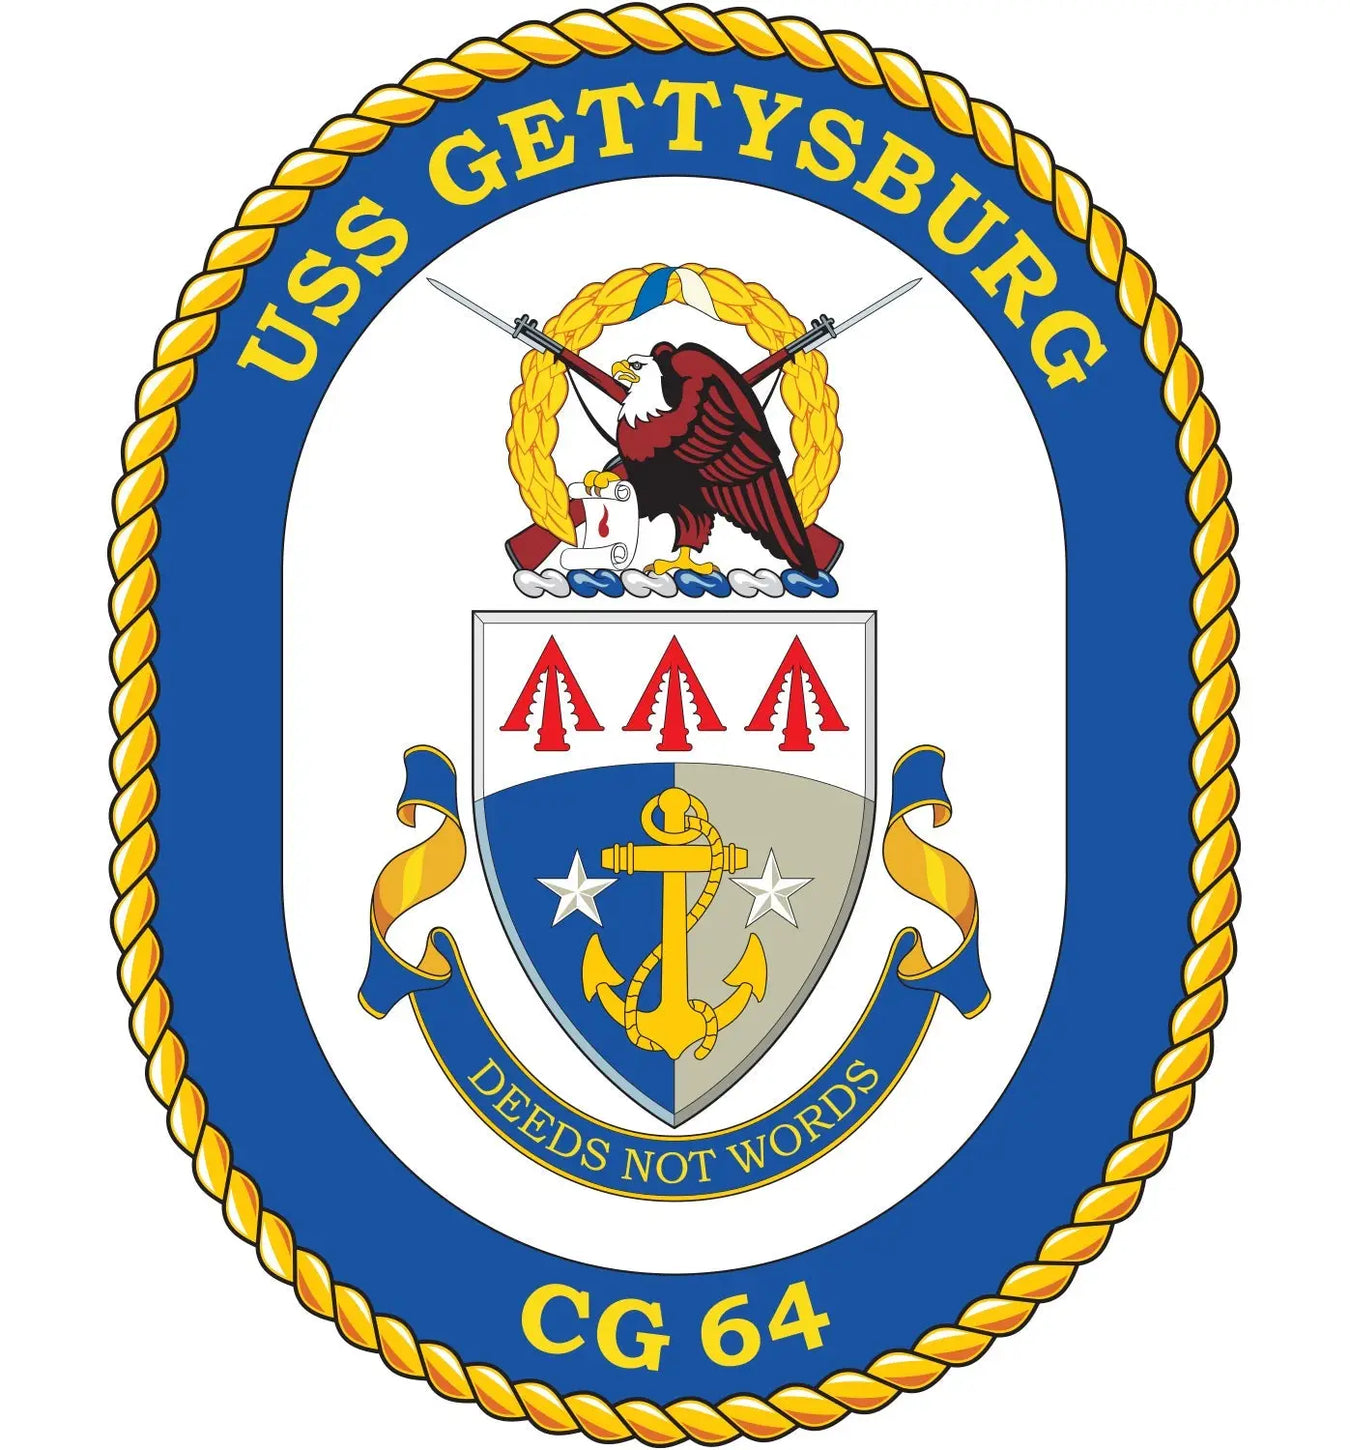 USS Gettysburg (CG-64)